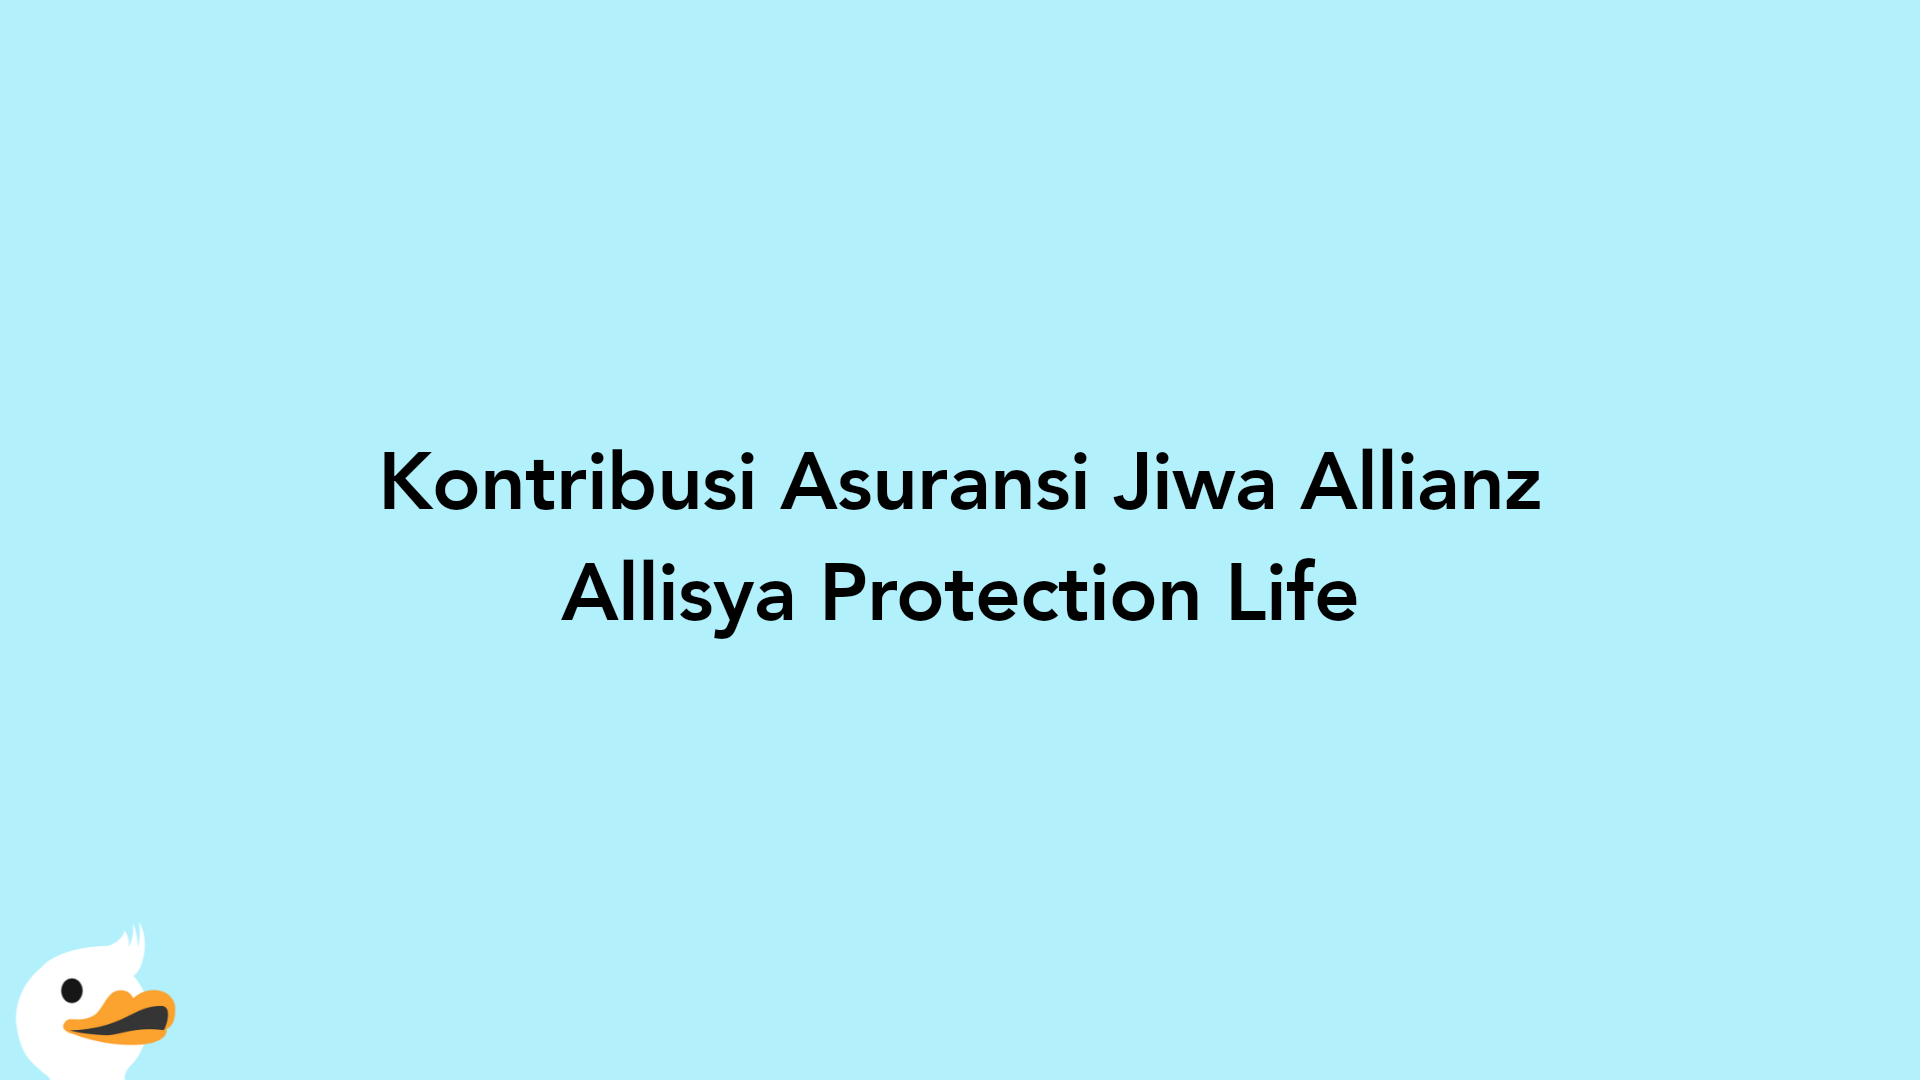 Kontribusi Asuransi Jiwa Allianz Allisya Protection Life